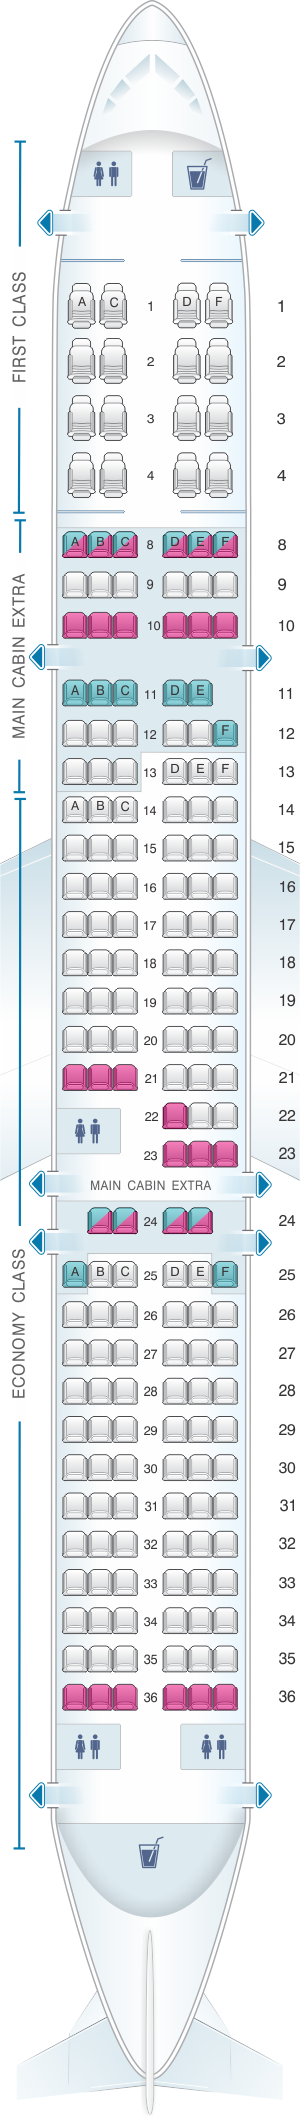 Plan de cabine American Airlines Airbus A321 181pax | SeatMaestro.fr